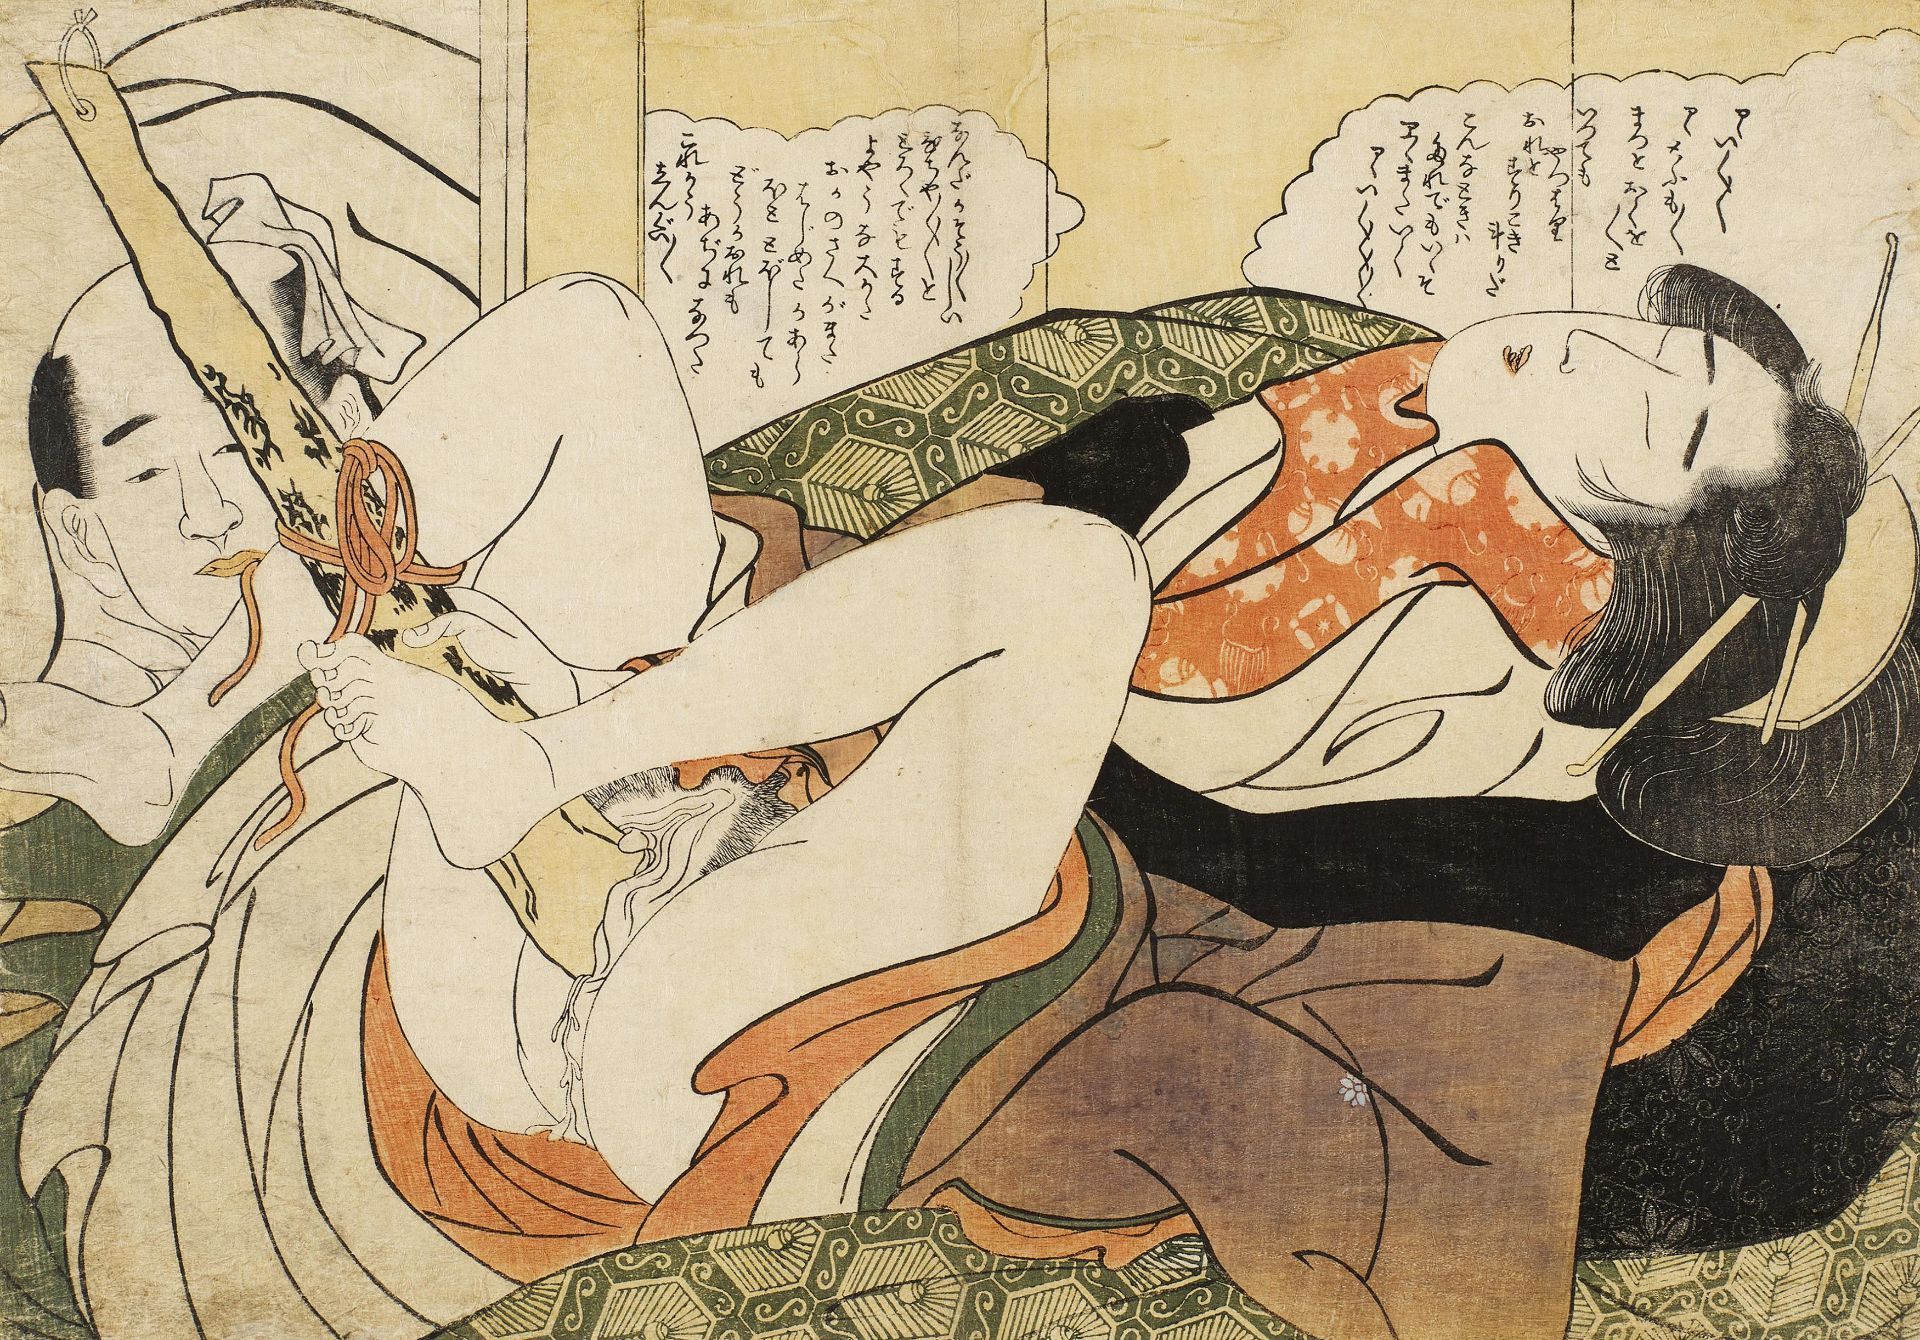 13 Blätter der Shunga-Serie "Fumi no kiyogaki" - Image 21 of 27